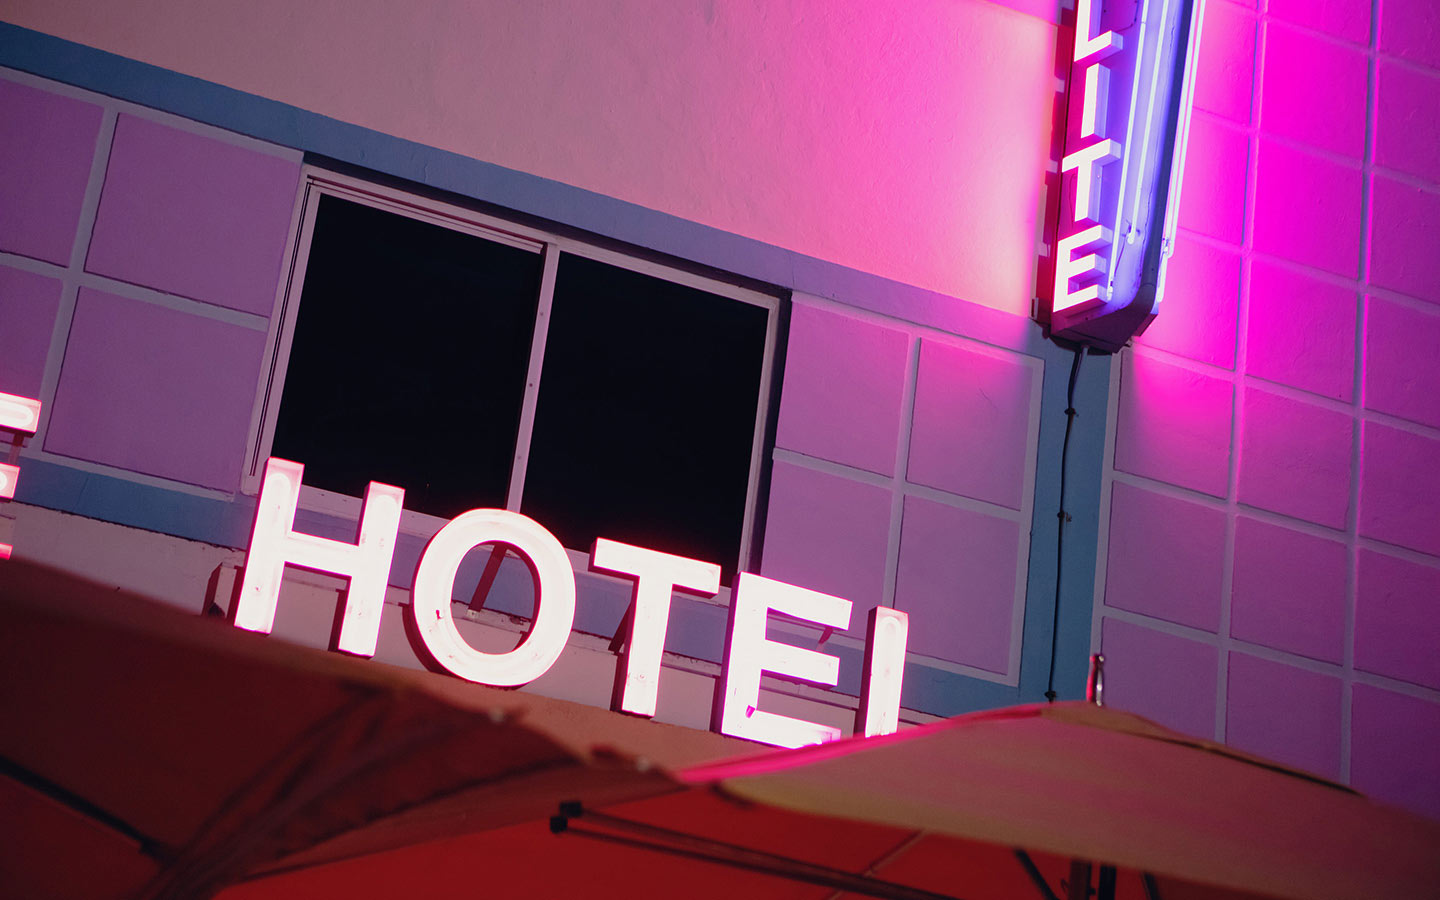 Neon hotel sign